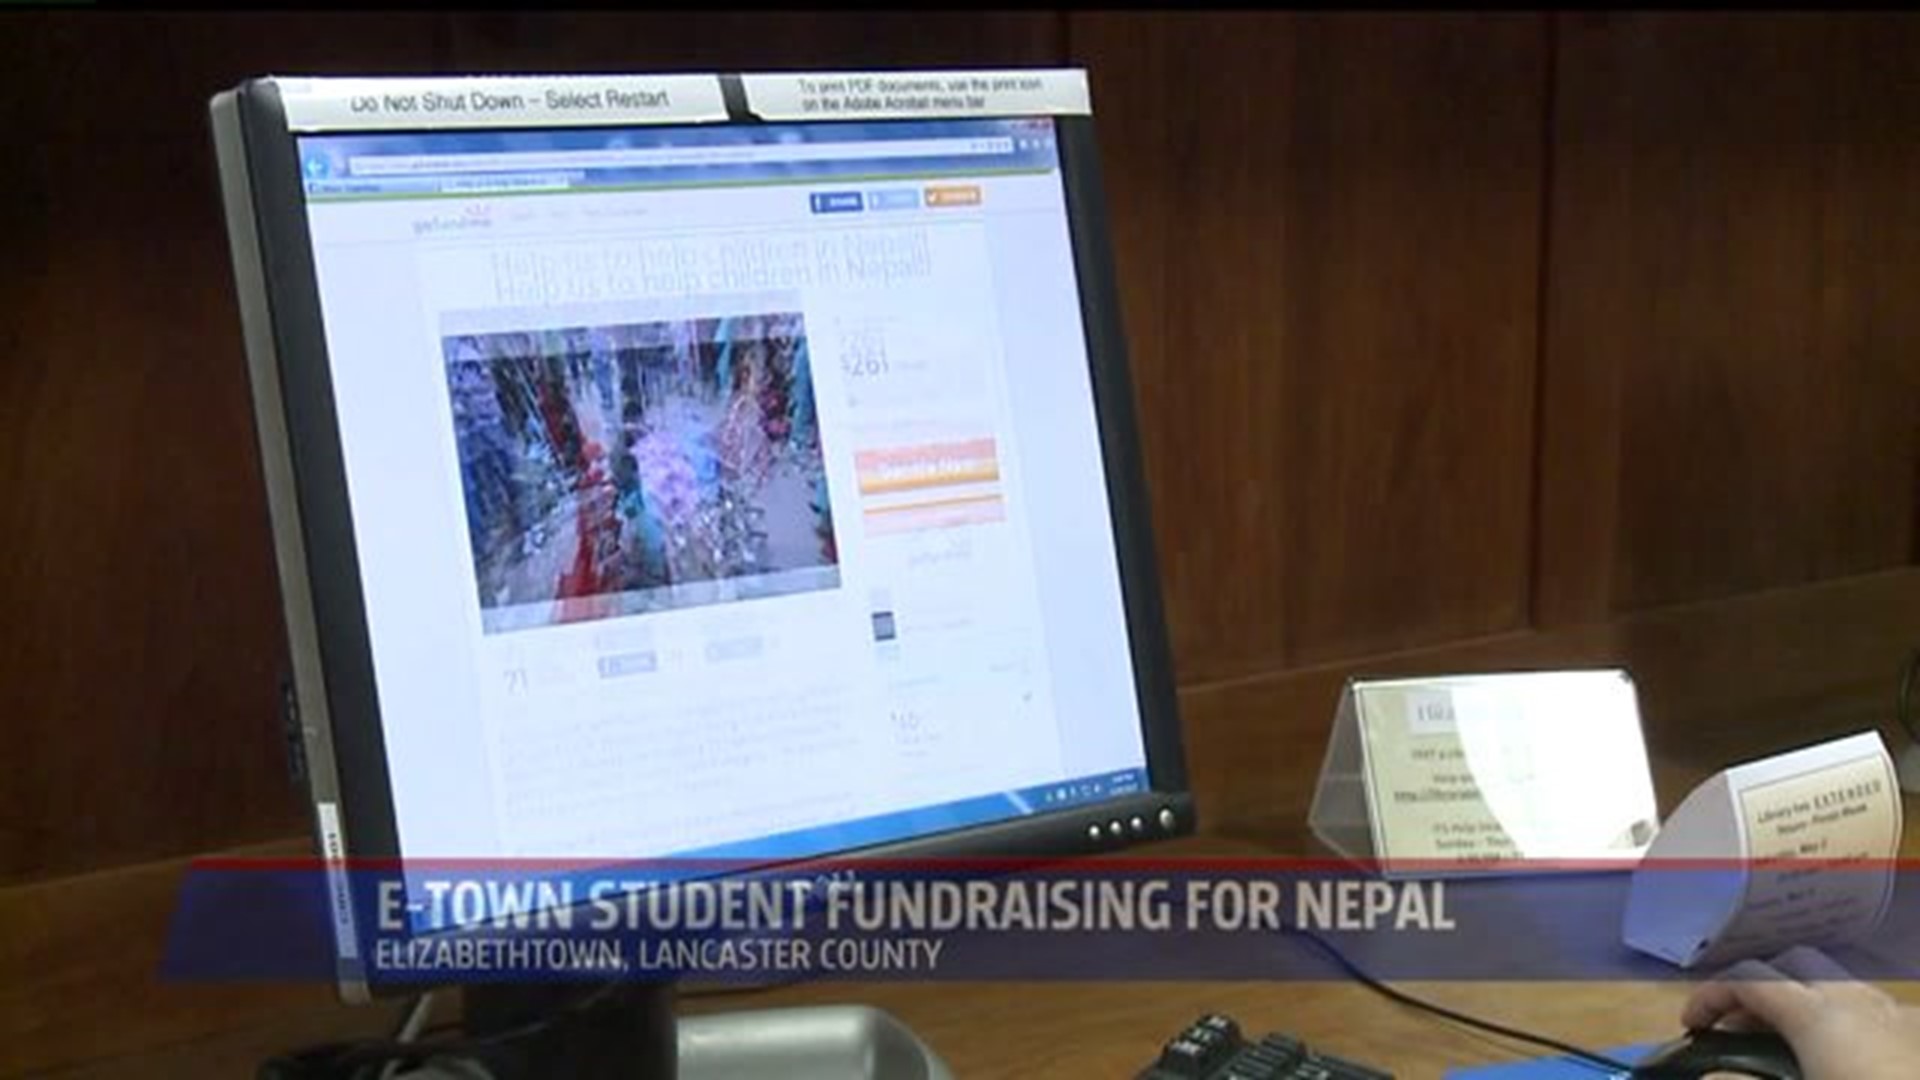 Elizabethtown Student Fundraising for Nepal